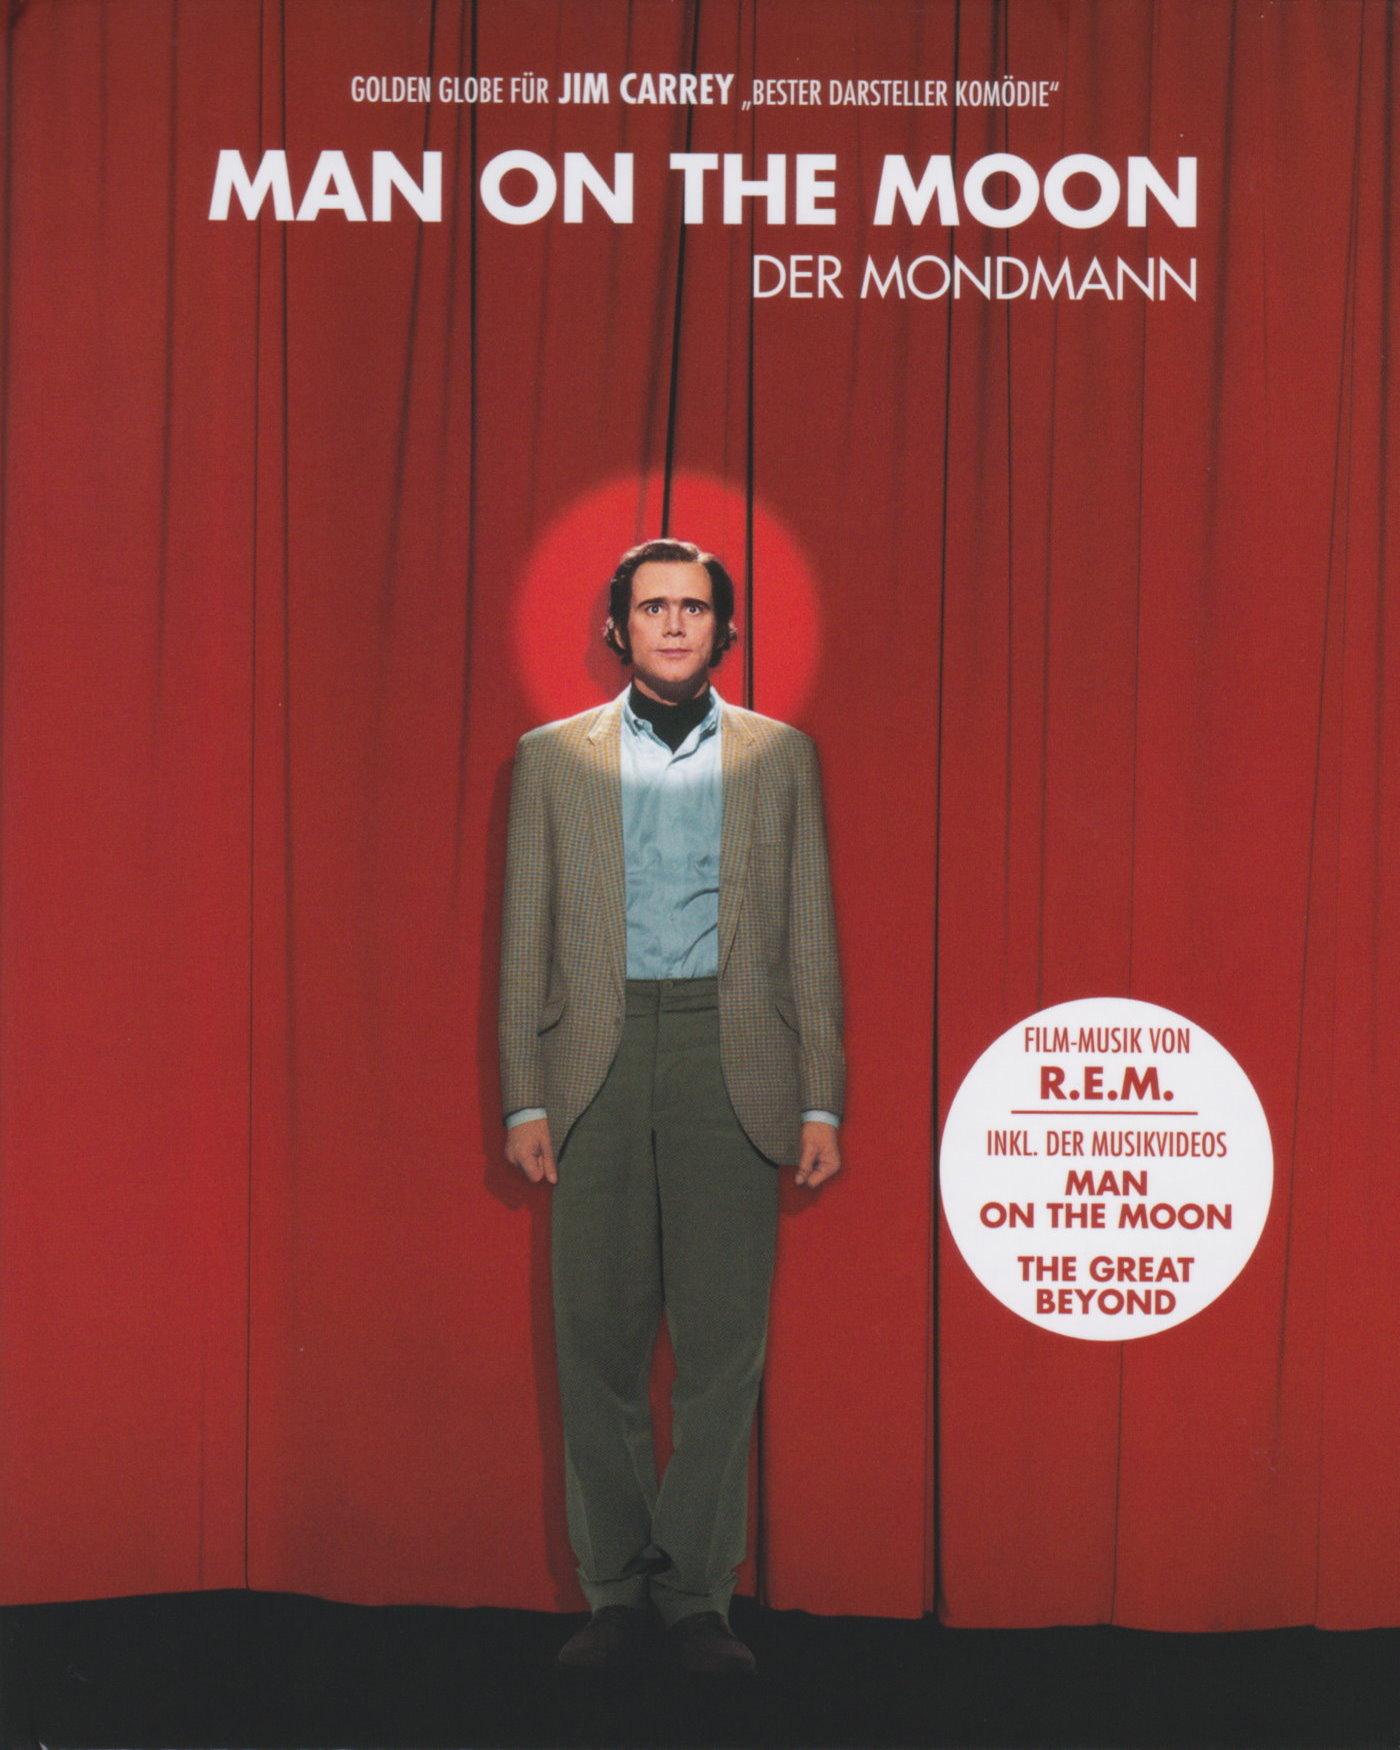 Cover - Man on the Moon - Der Mondmann.jpg